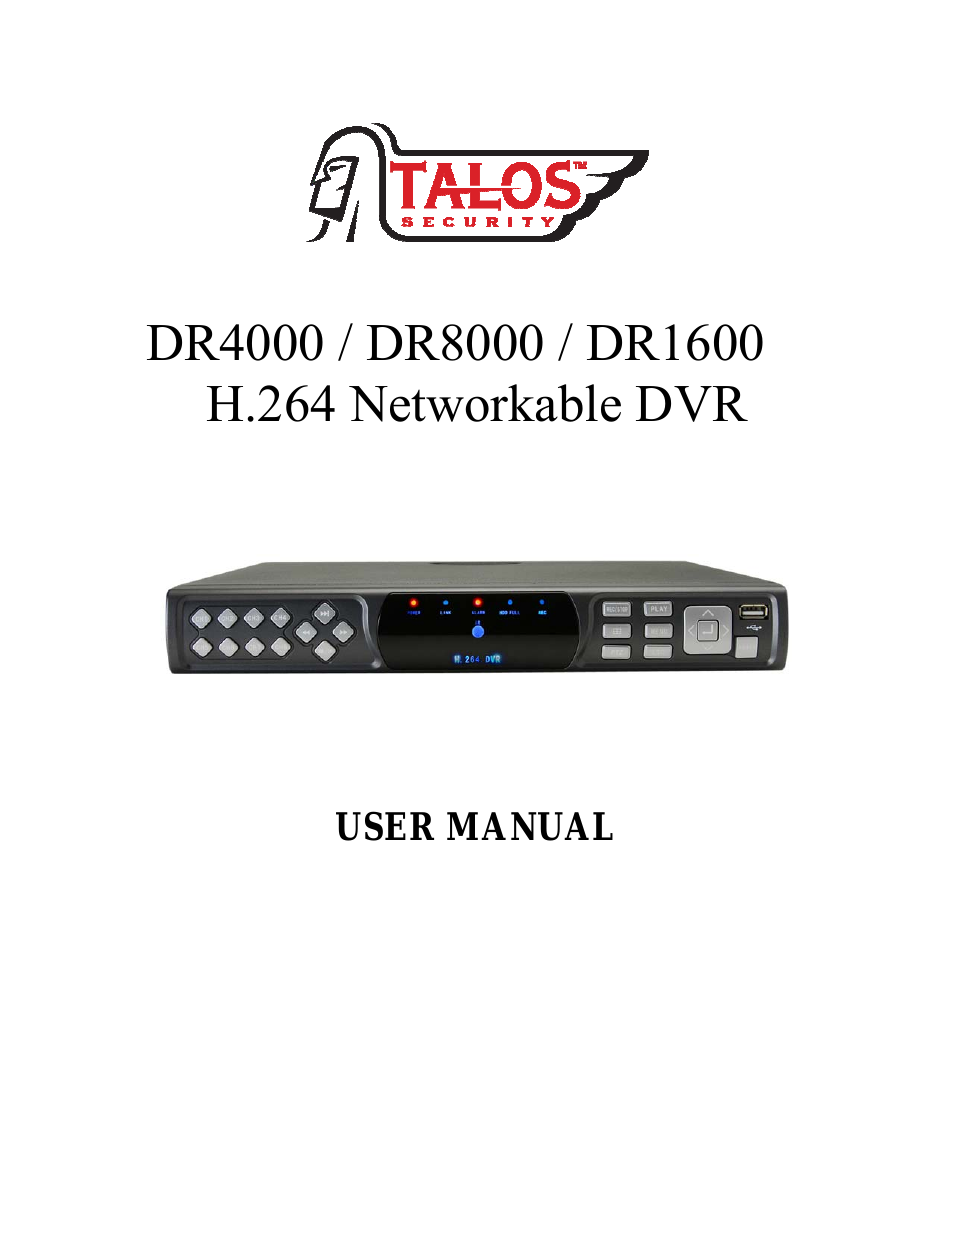 DR8000 Series DVR User Manual